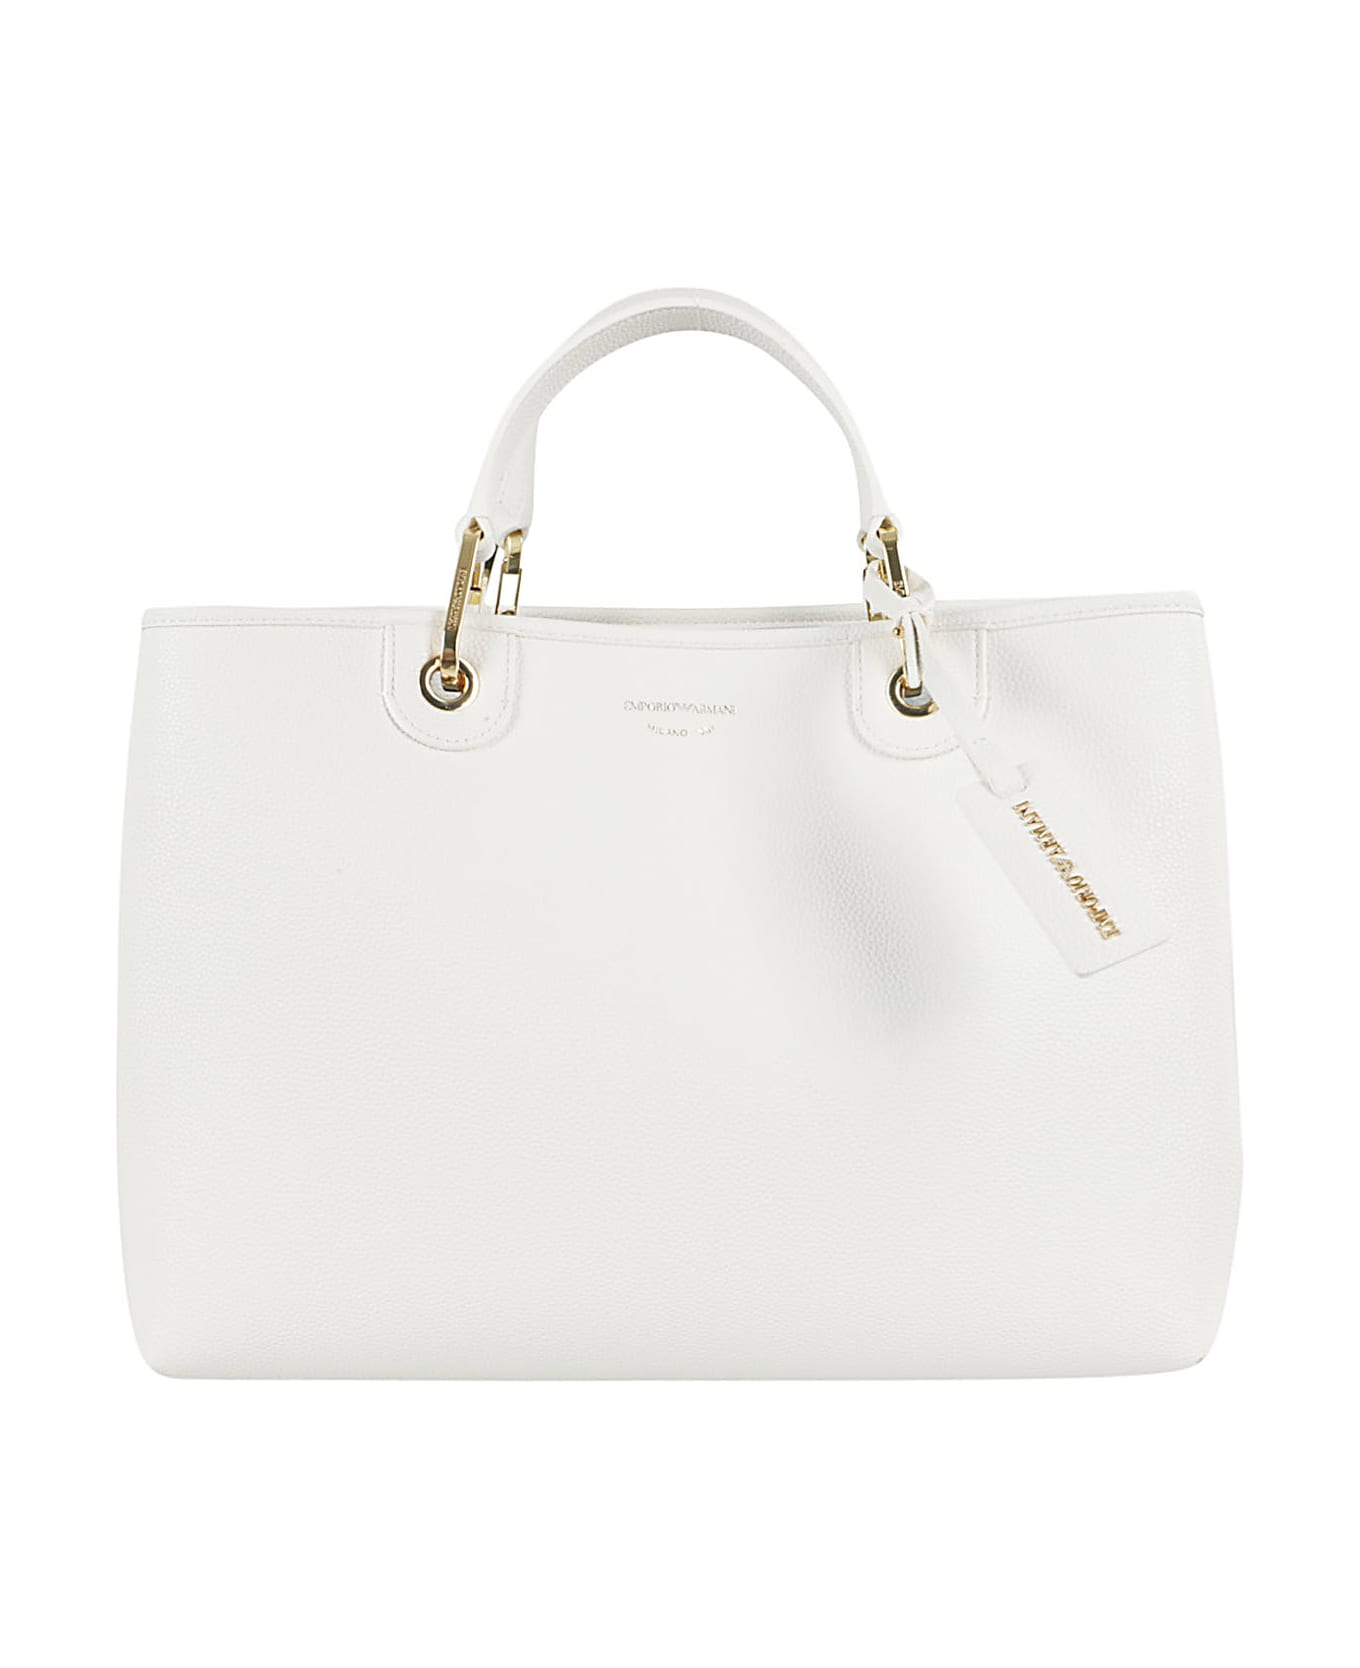 Emporio Armani Shopping Bag - Bianco Cuoio